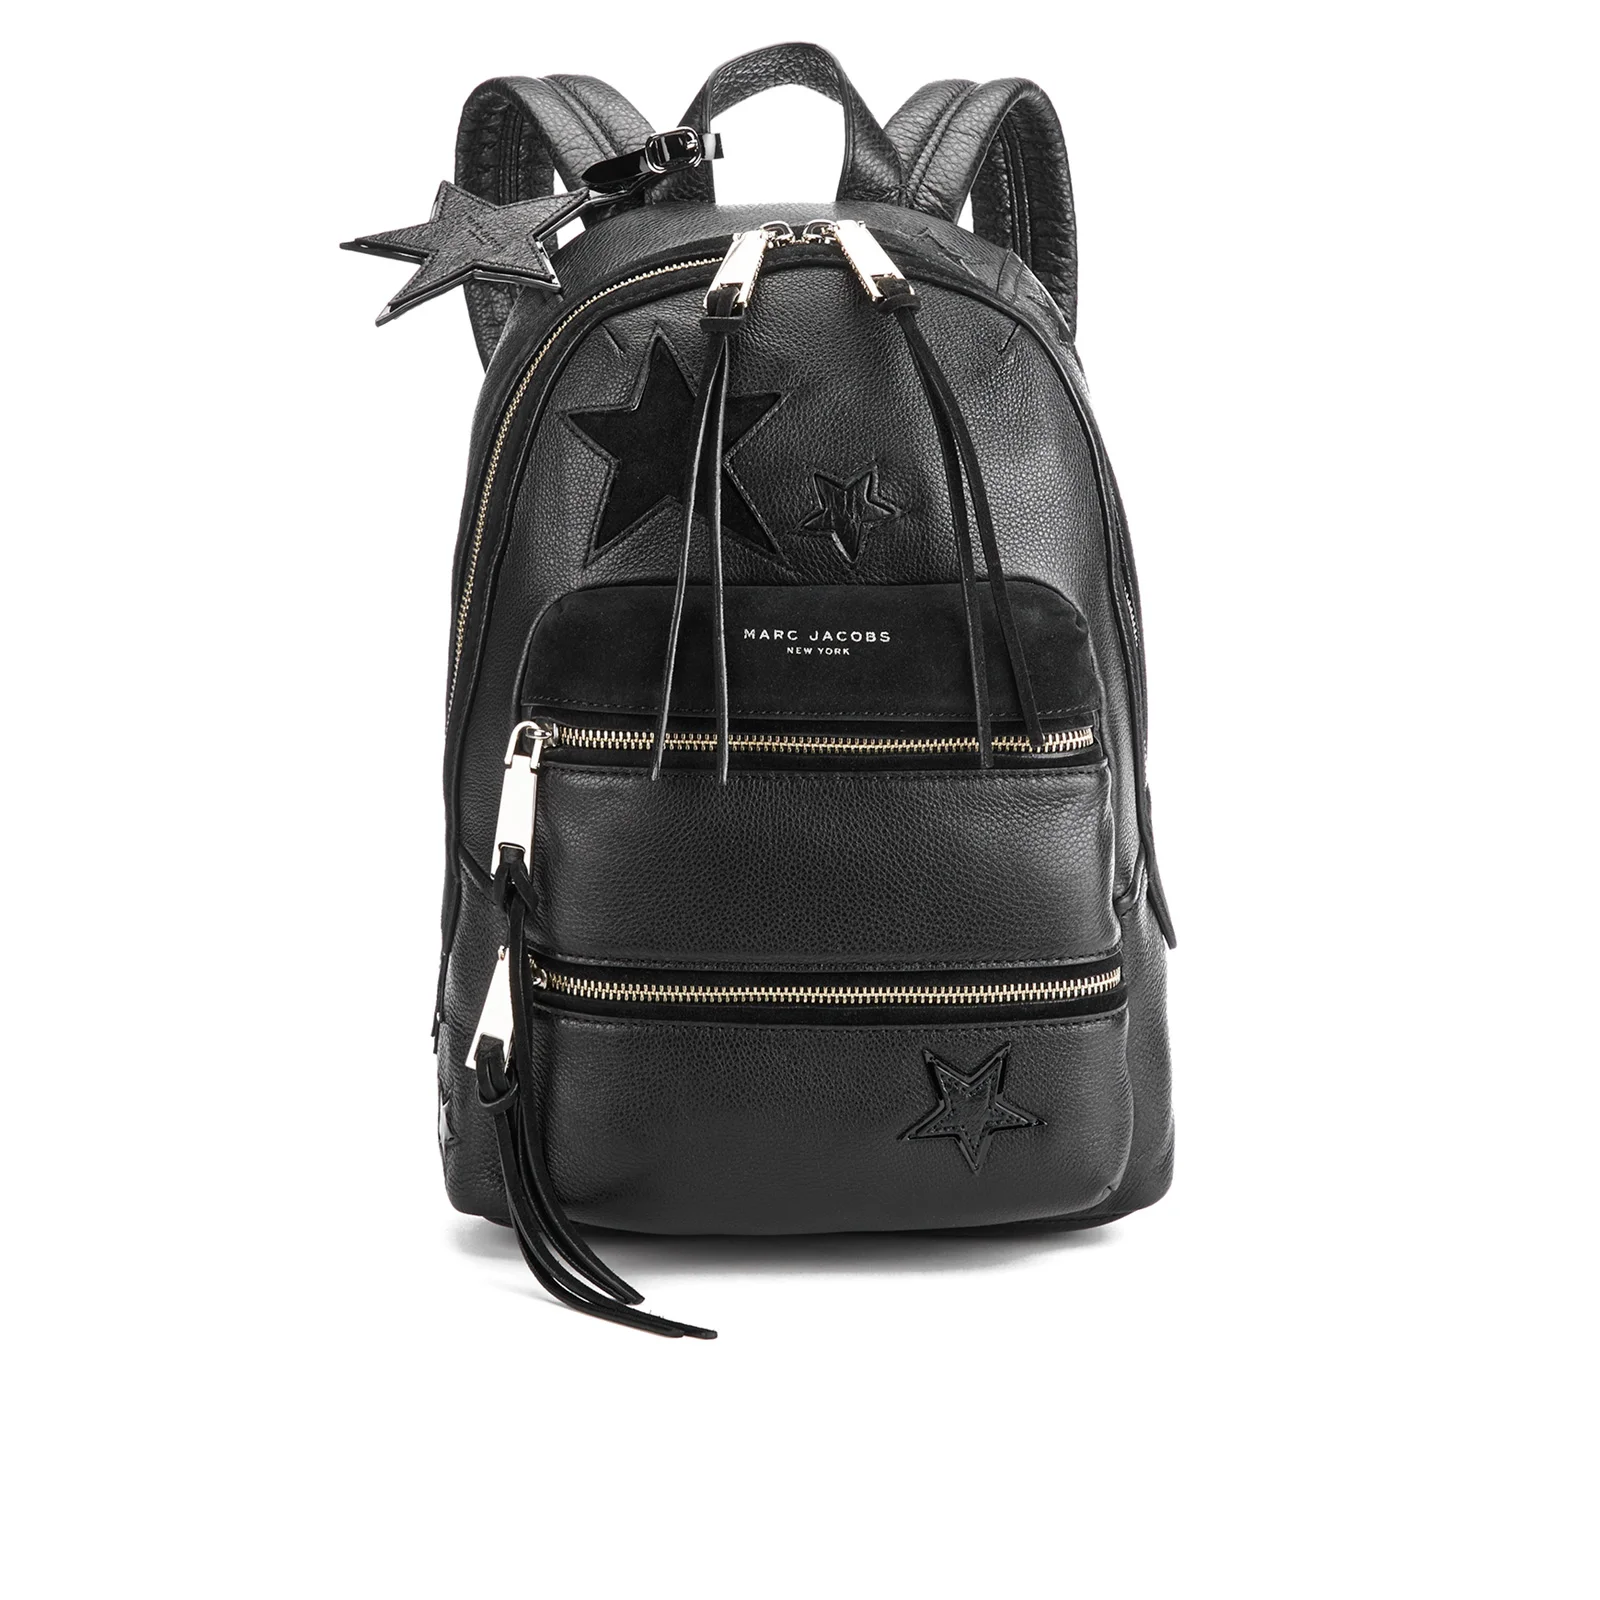 Marc Jacobs Women's Star Patchwork Backpack - Black/Multi Image 1